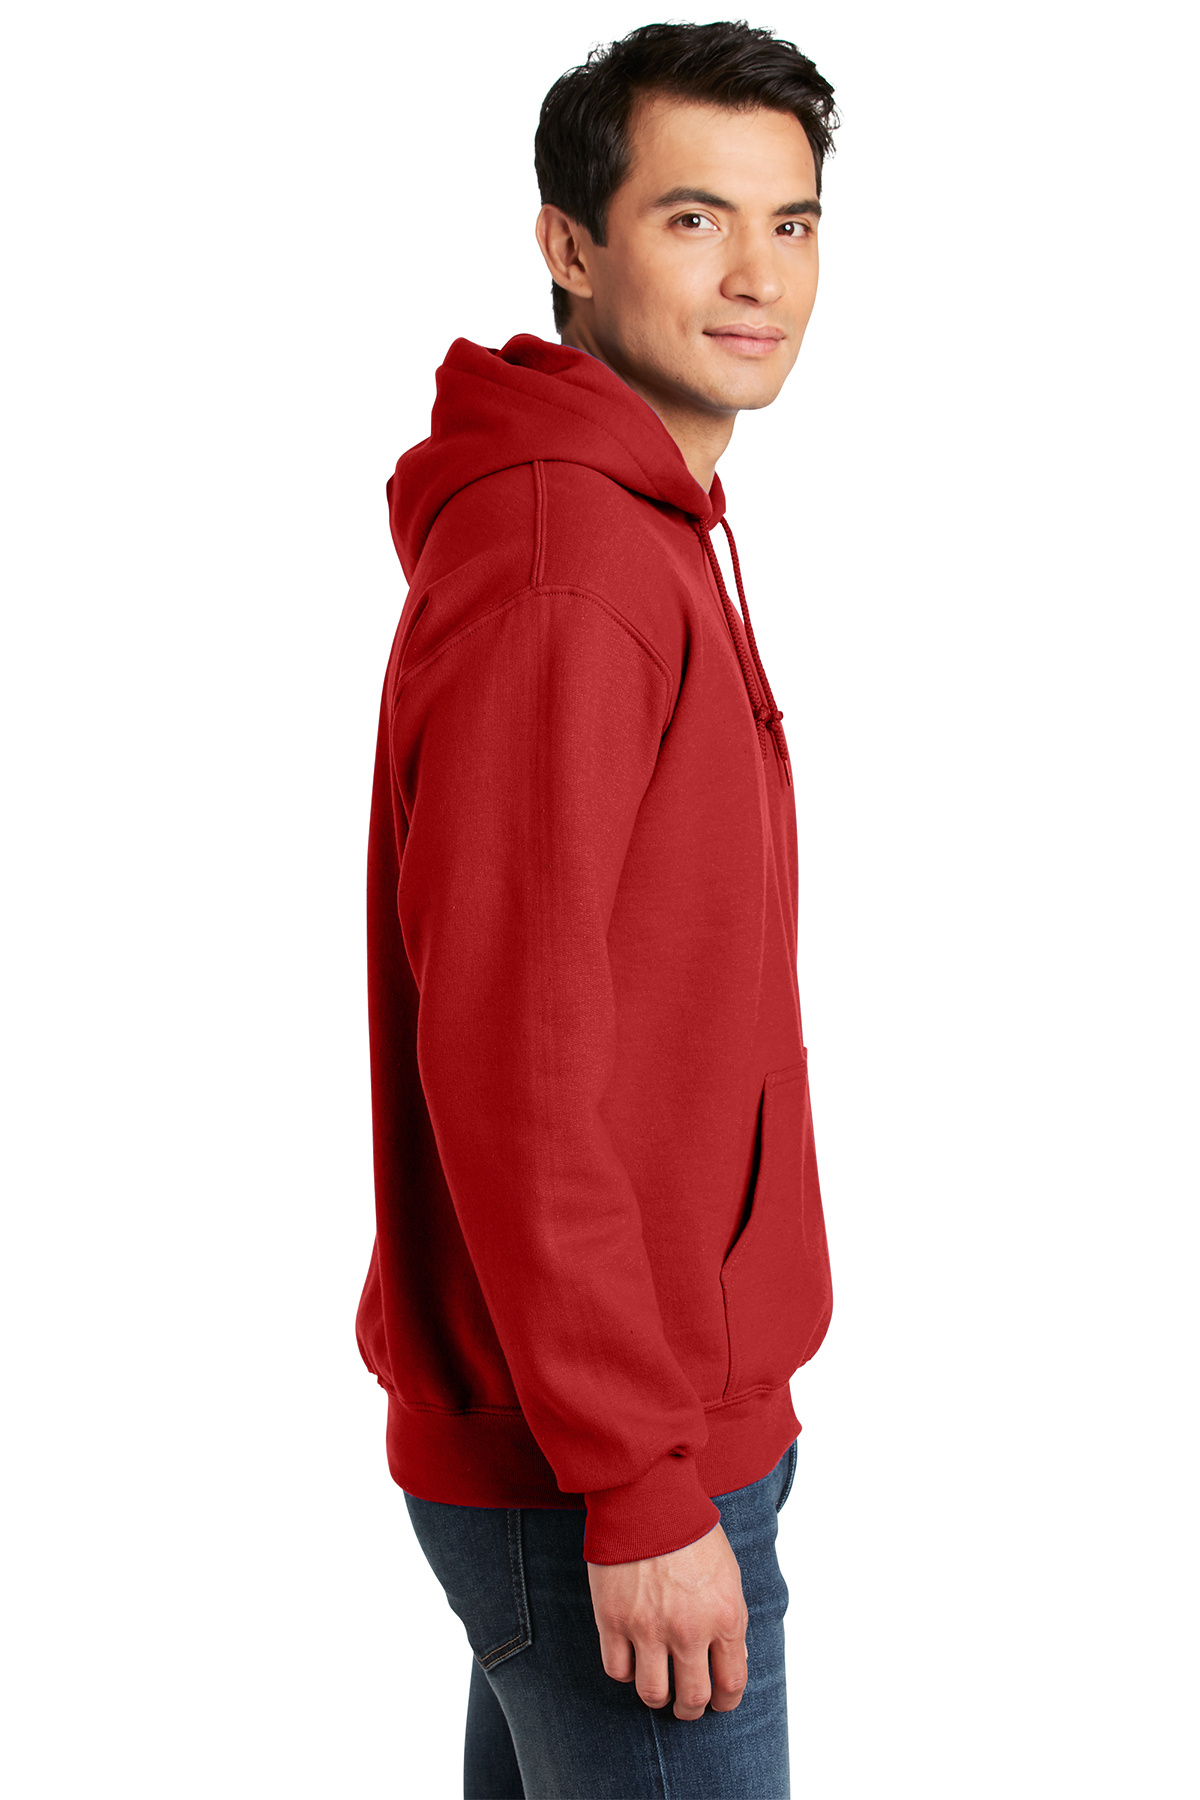 Gildan - DryBlend Pullover SanMar Sweatshirt | Product | Hooded